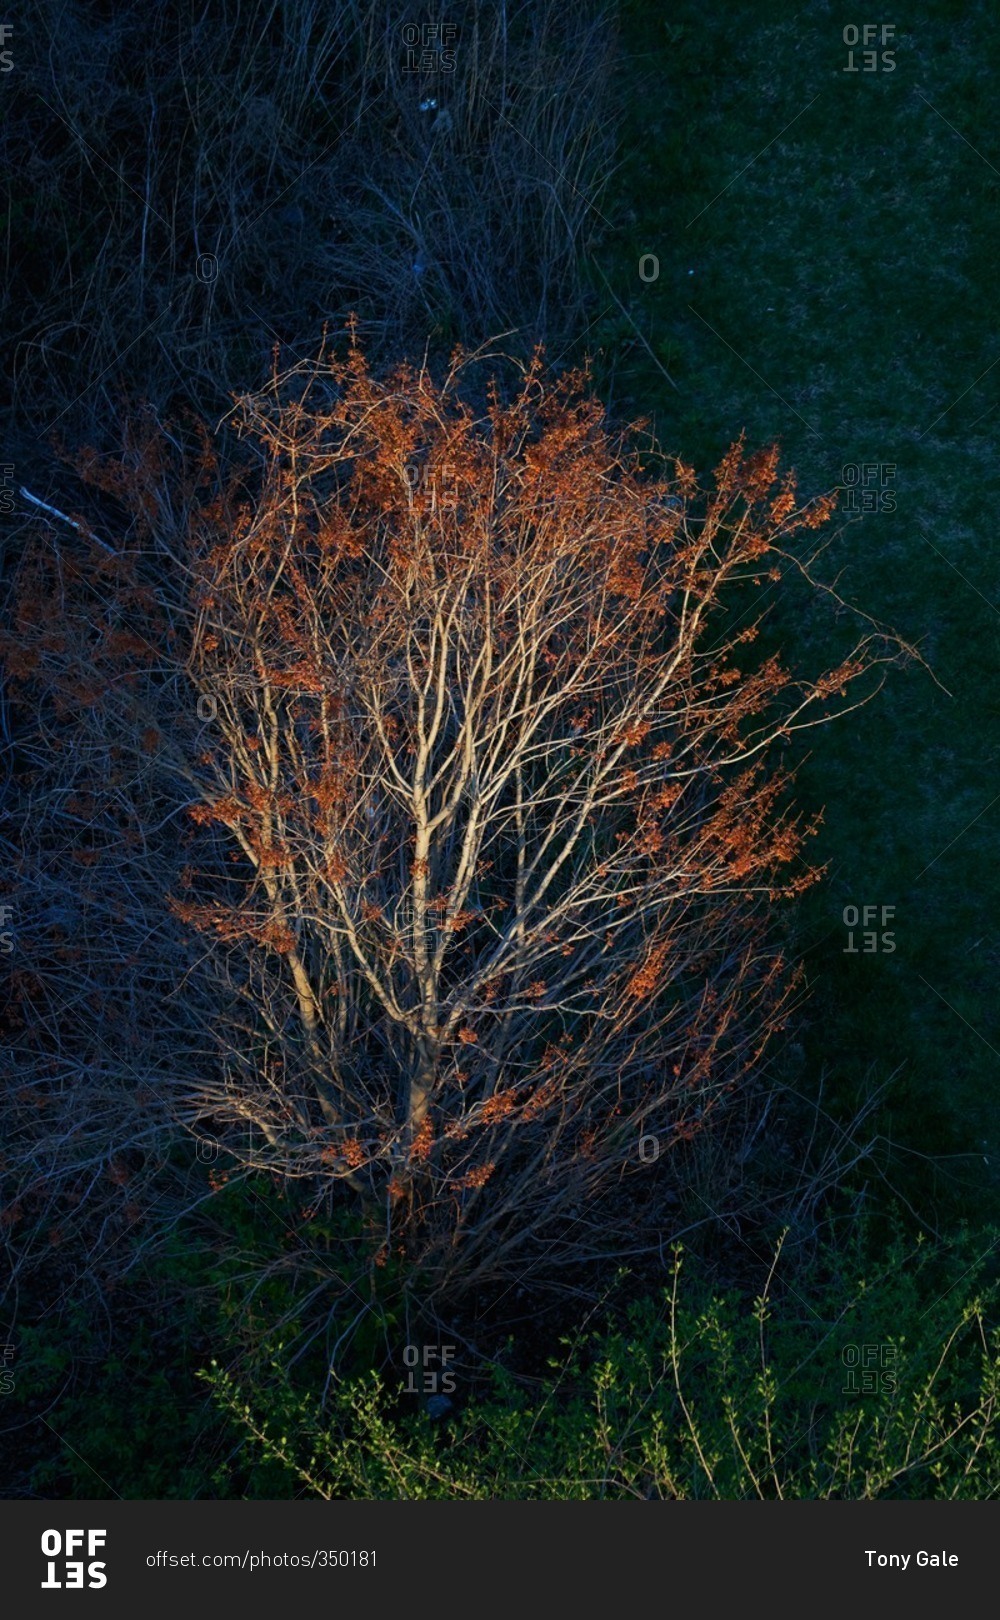 Tree with orange leaves